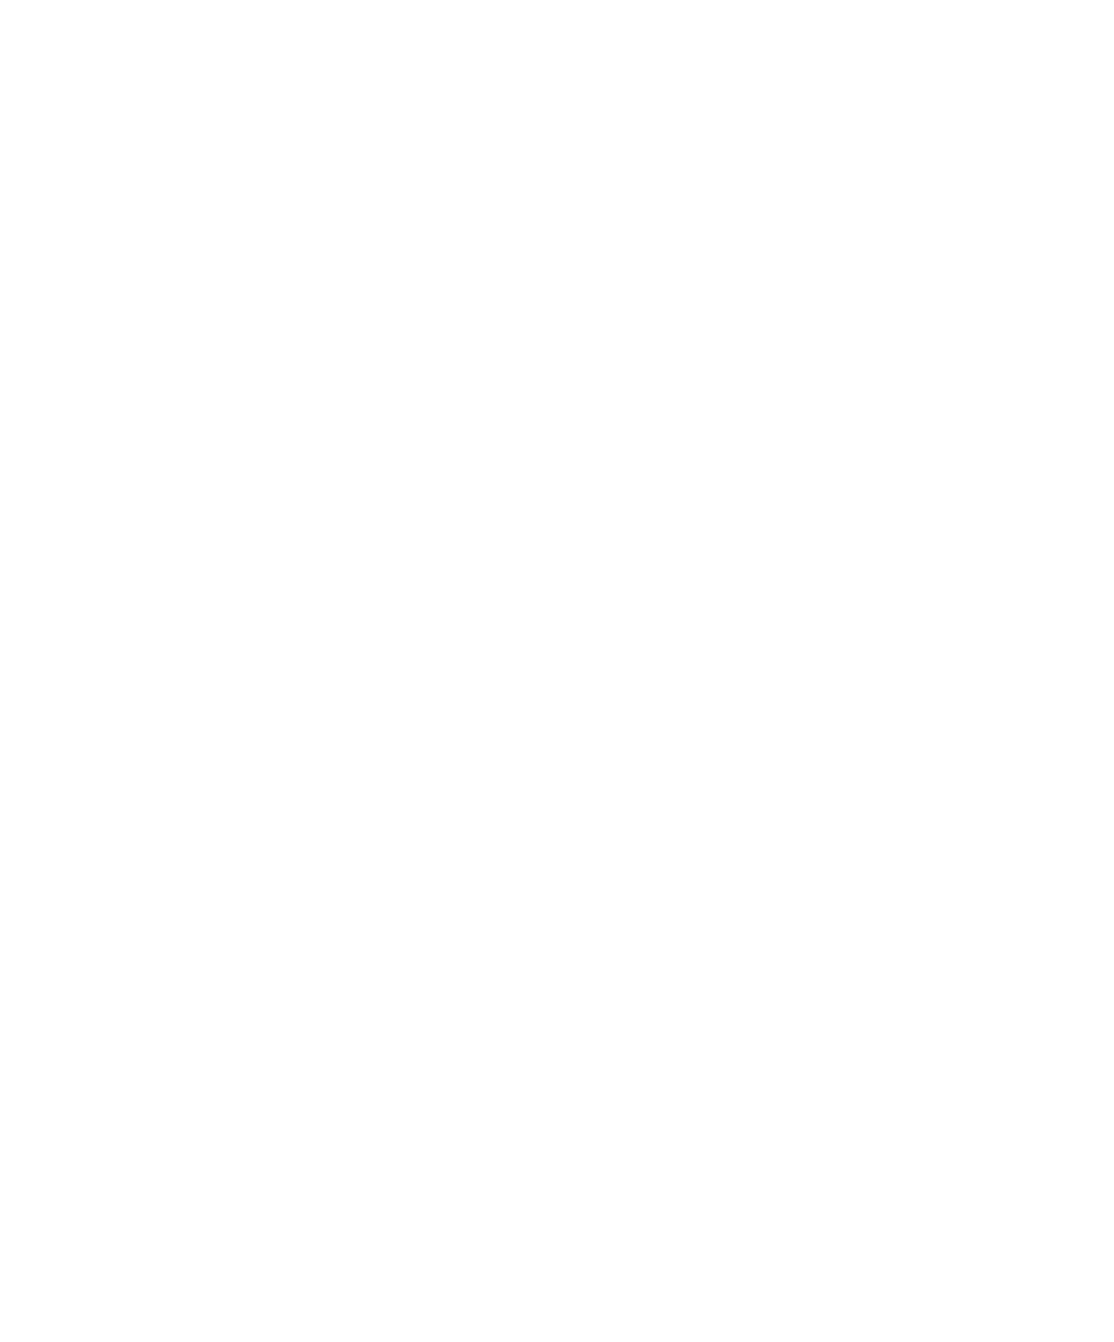 The Apricot Centre